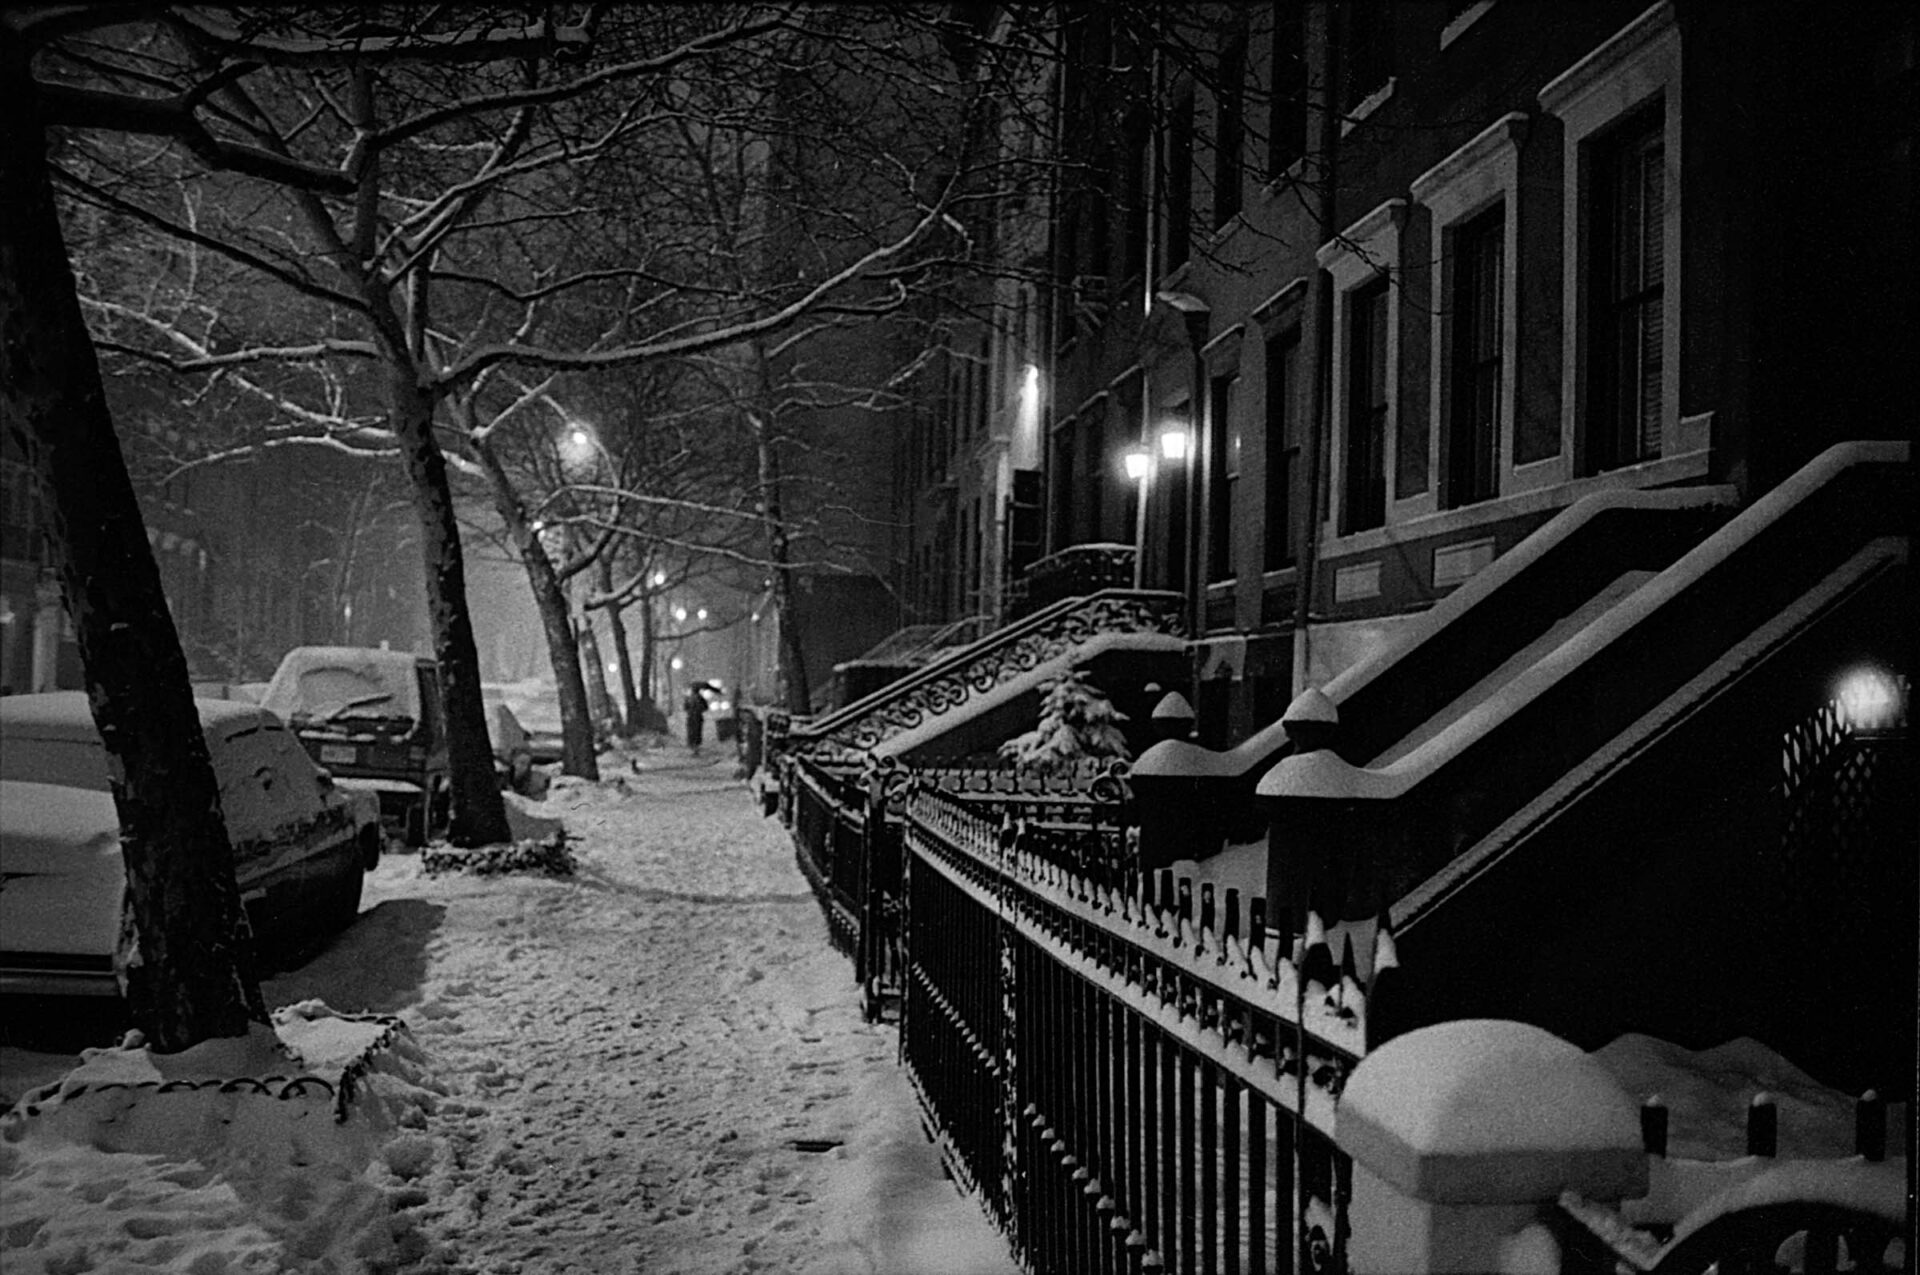 Quiet scene of fresh snow at night on W. !1th Street in New York City, 1991.